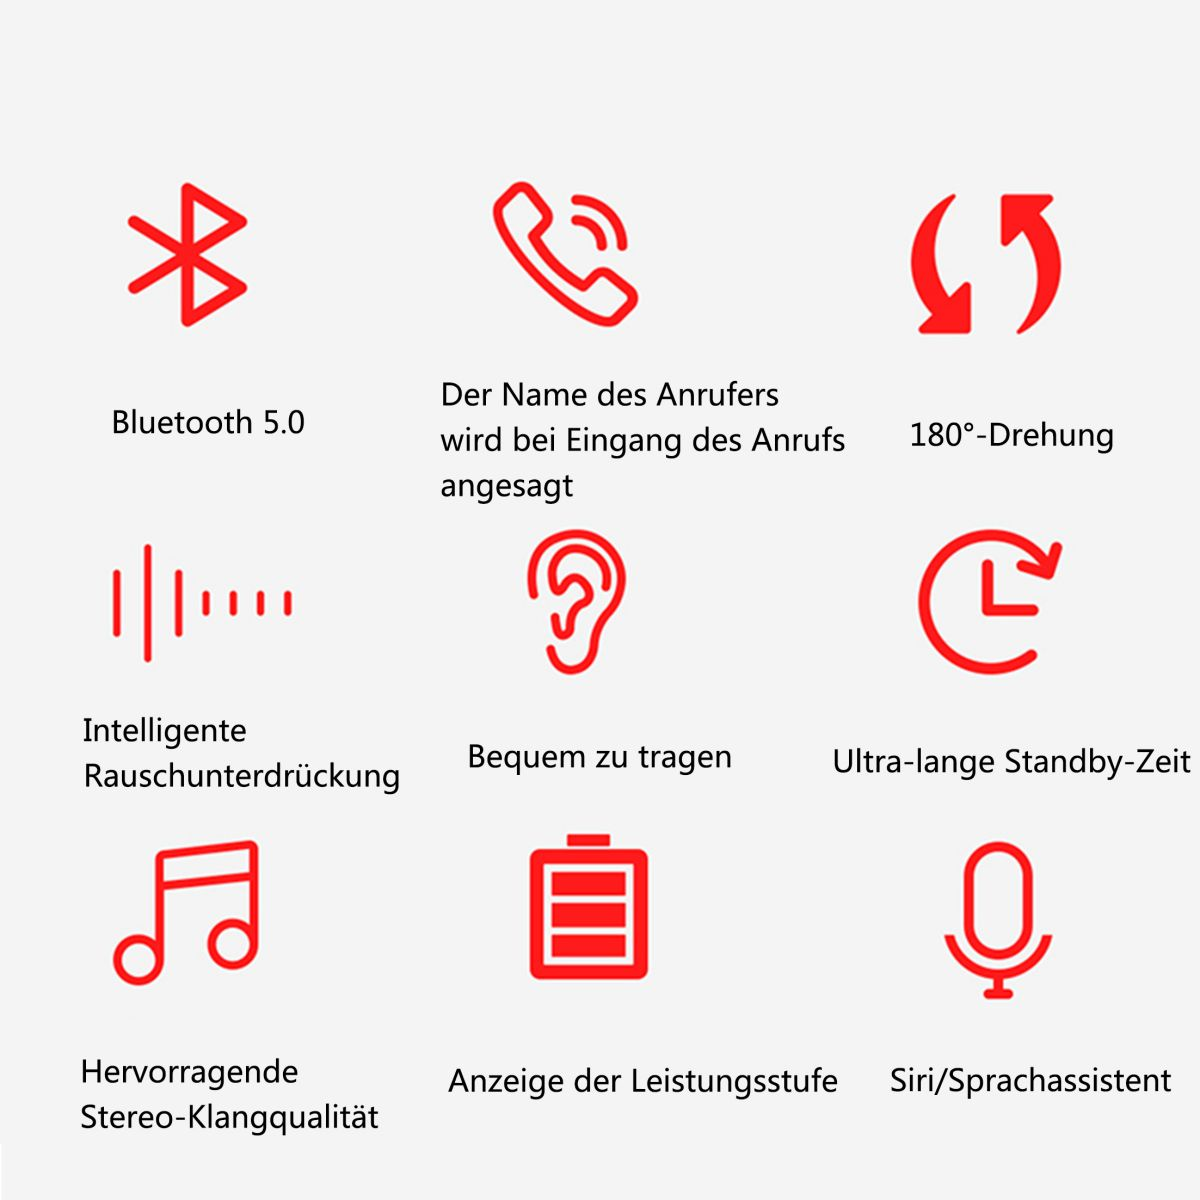 DIIDA In-Ear-Kopfhörer,Einseitige Bluetooth schwarz Kopfhörer Kopfhörer,Bluetooth,Schwarz Bluetooth-Kopfhörer, On-ear